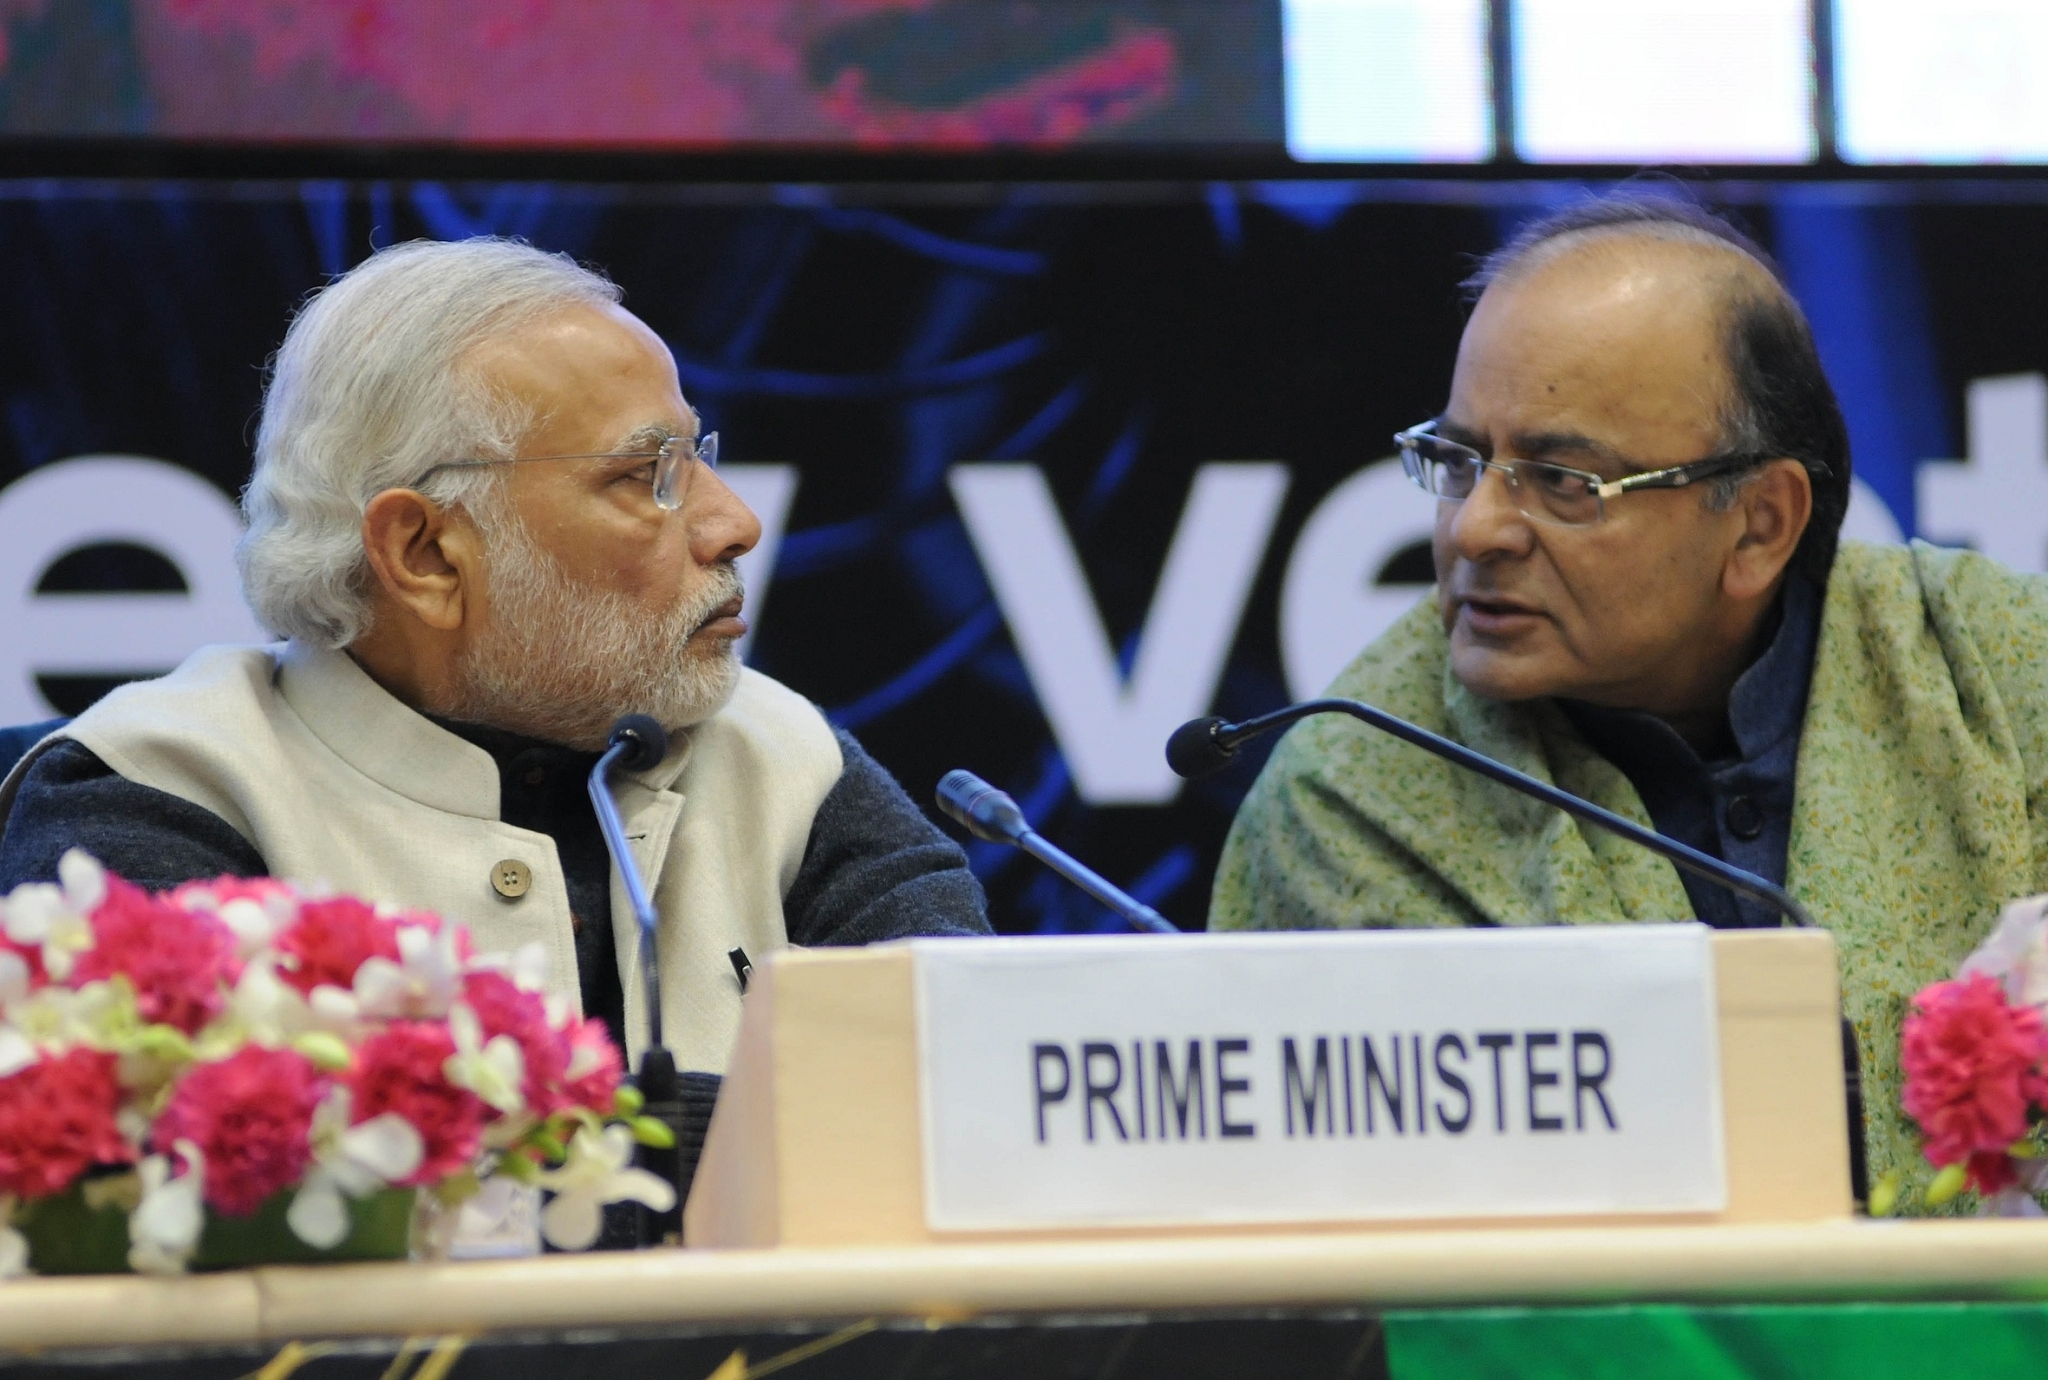 Prime Minister Narendra Modi and Finance Minister Arun Jaitley. (STRDEL/AFP/Getty Images)